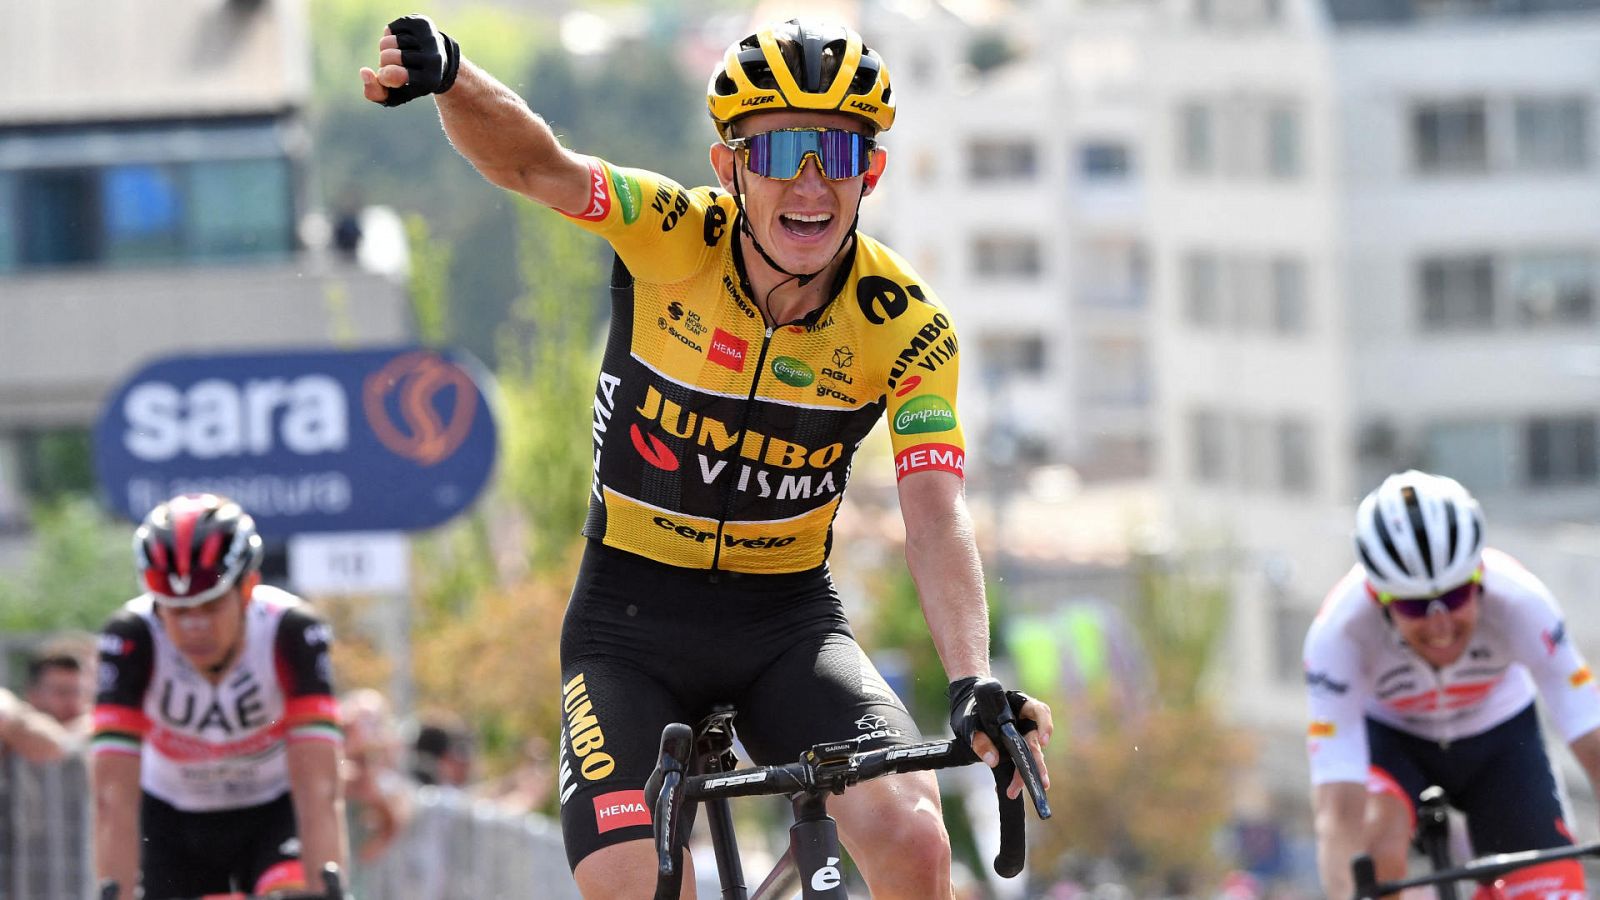 El neerlandés Koen Bouwman ha ganado en Potenza la séptima etapa del Giro